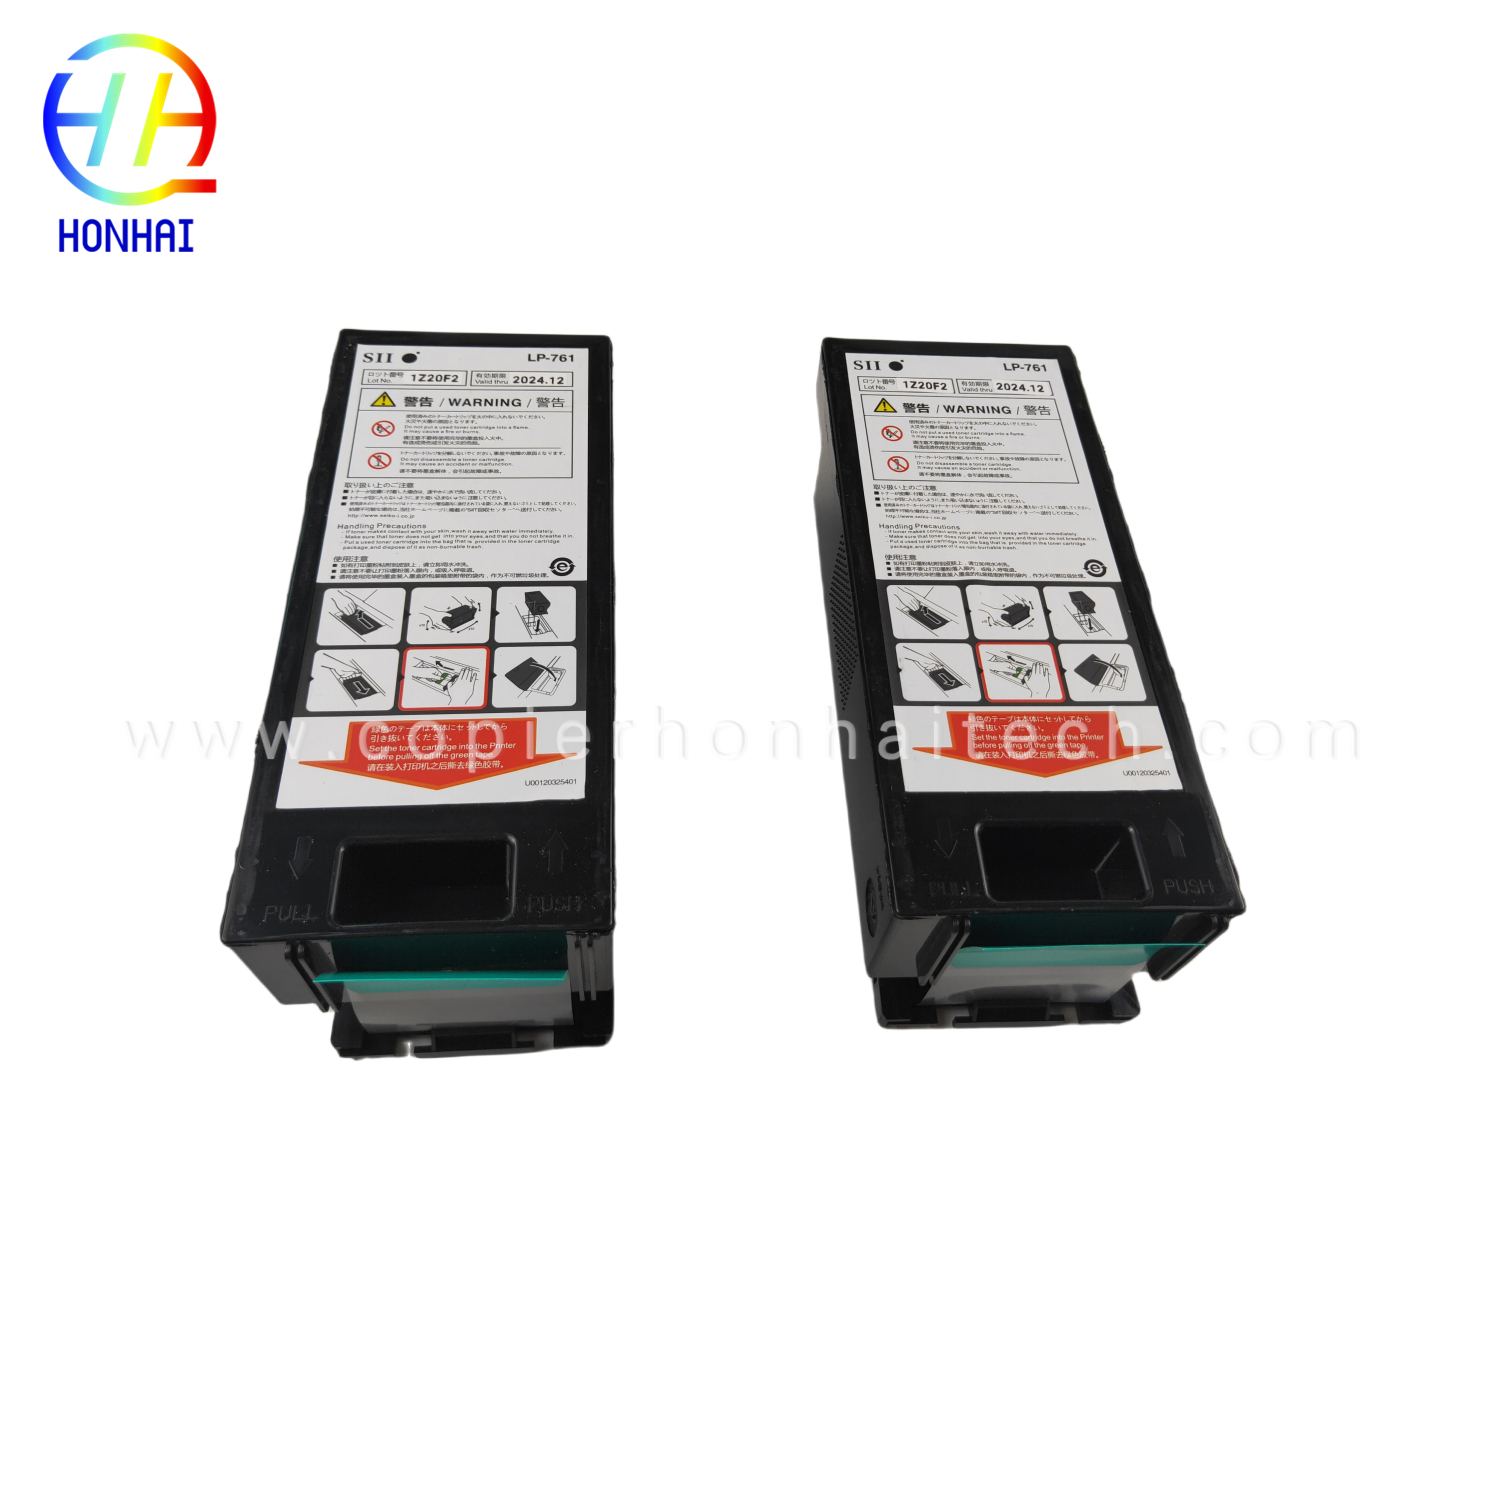 https://www.copierhonhaitech.com/original-new-toner-cartridge-black-for-oki-1z20f2-seiko-lp-761-lp1030-lp2050-product/